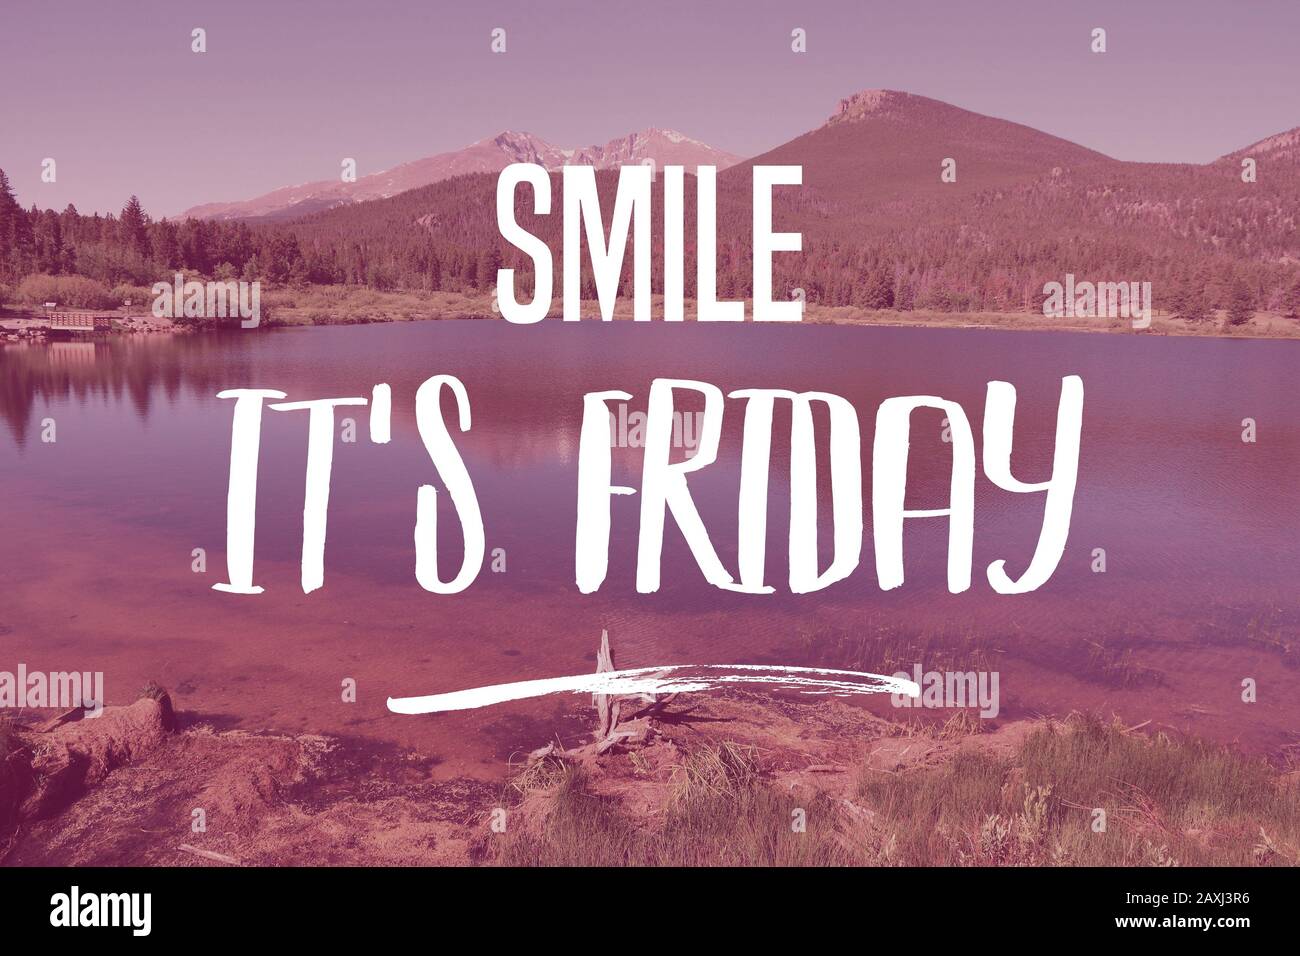 Lächeln Es ist Freitag - Social Media motivationale Banner. Stockfoto